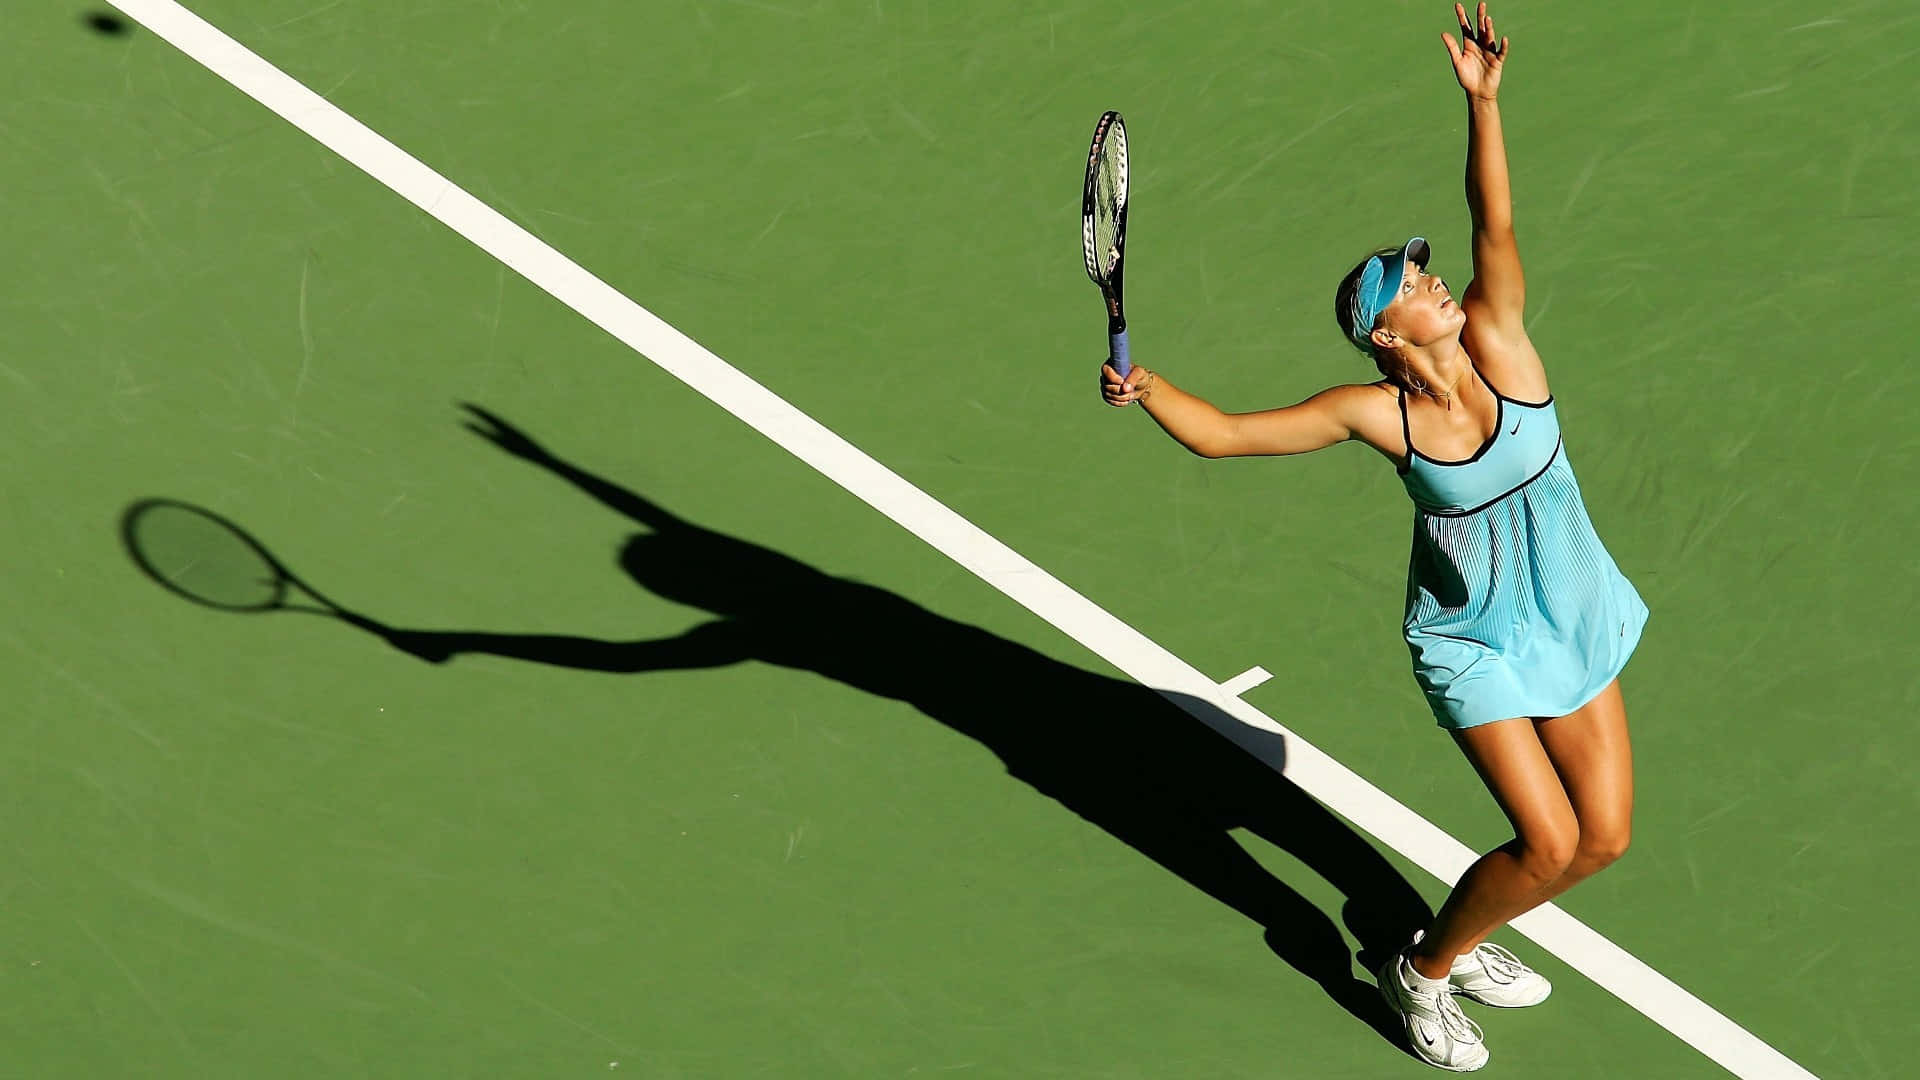 HD Russisk Tennis Spiller Maria Sharapova Baggrund